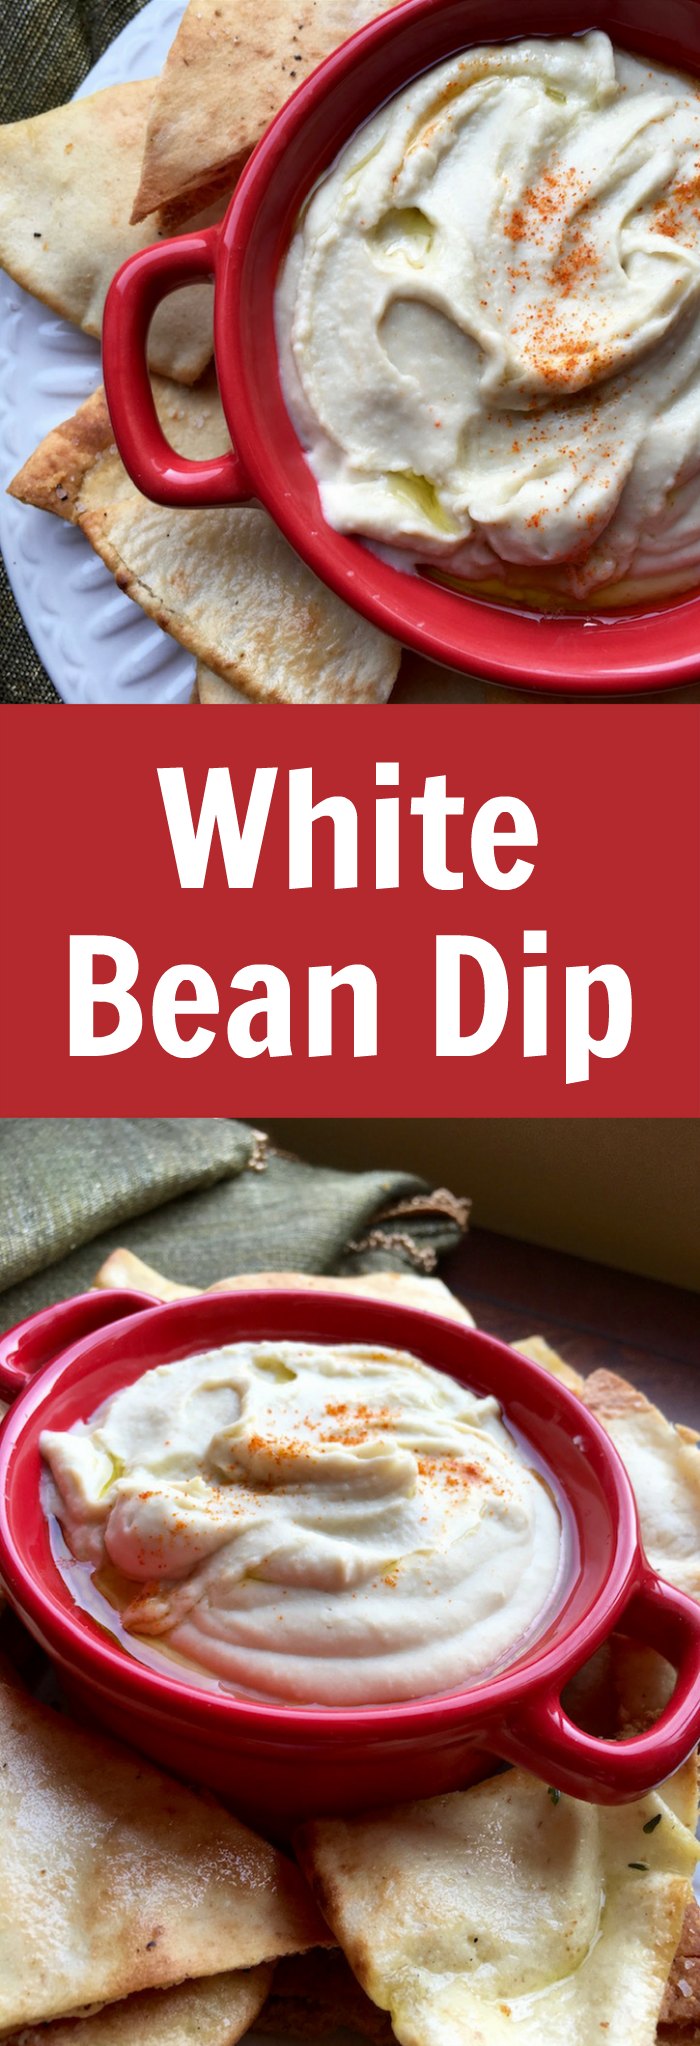 White Bean Dip Recipe with Homemade Pita Chips